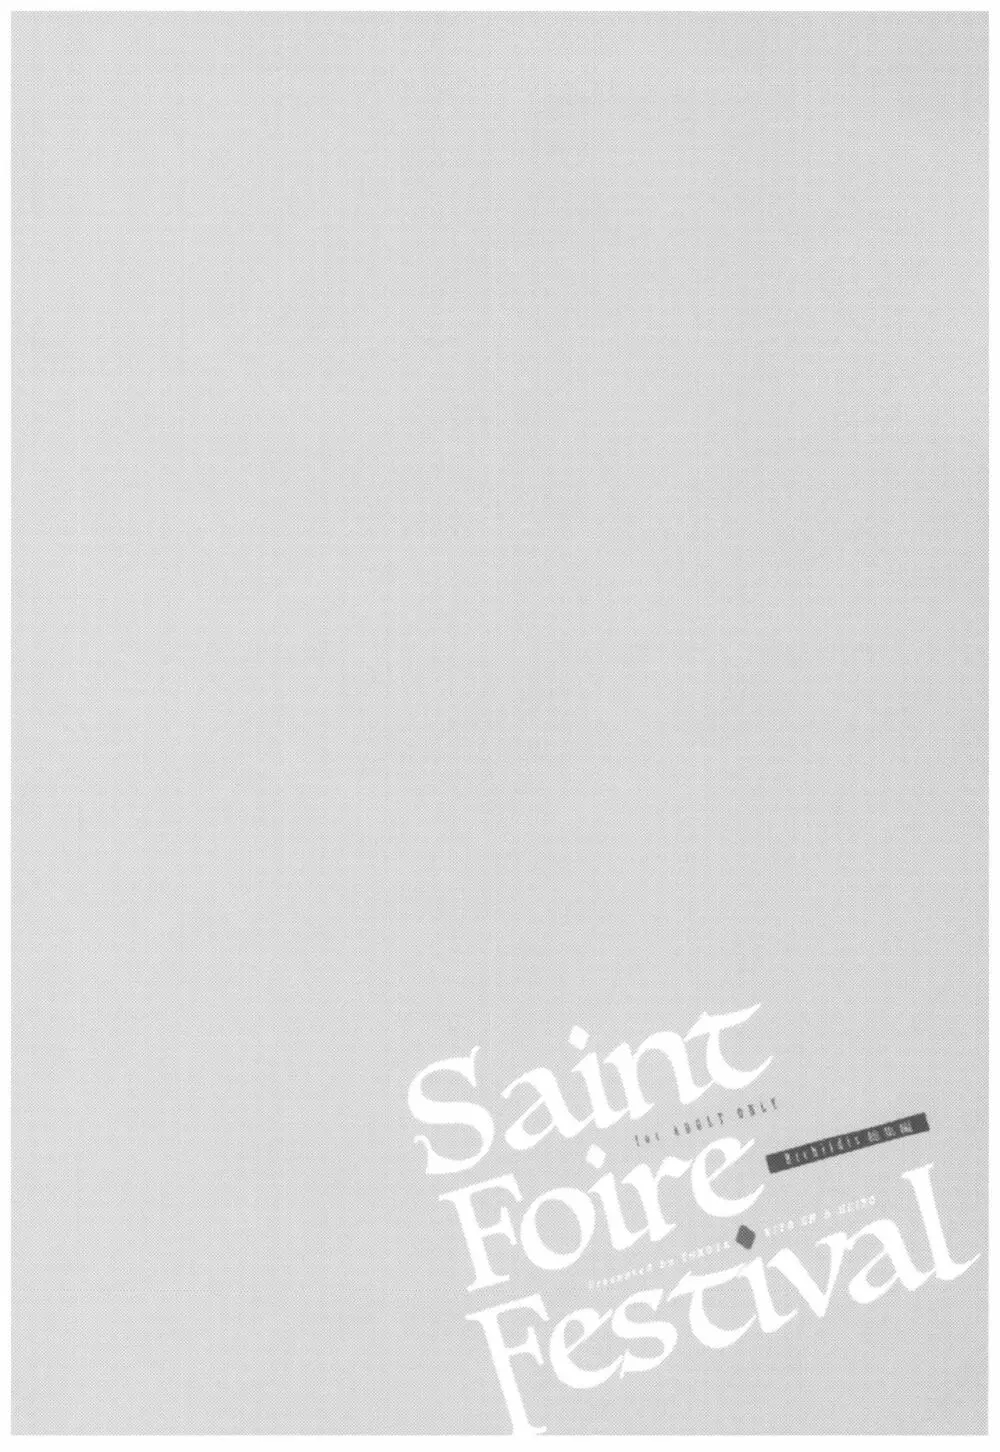 Saint Foire Festival Richildis総集編 131ページ